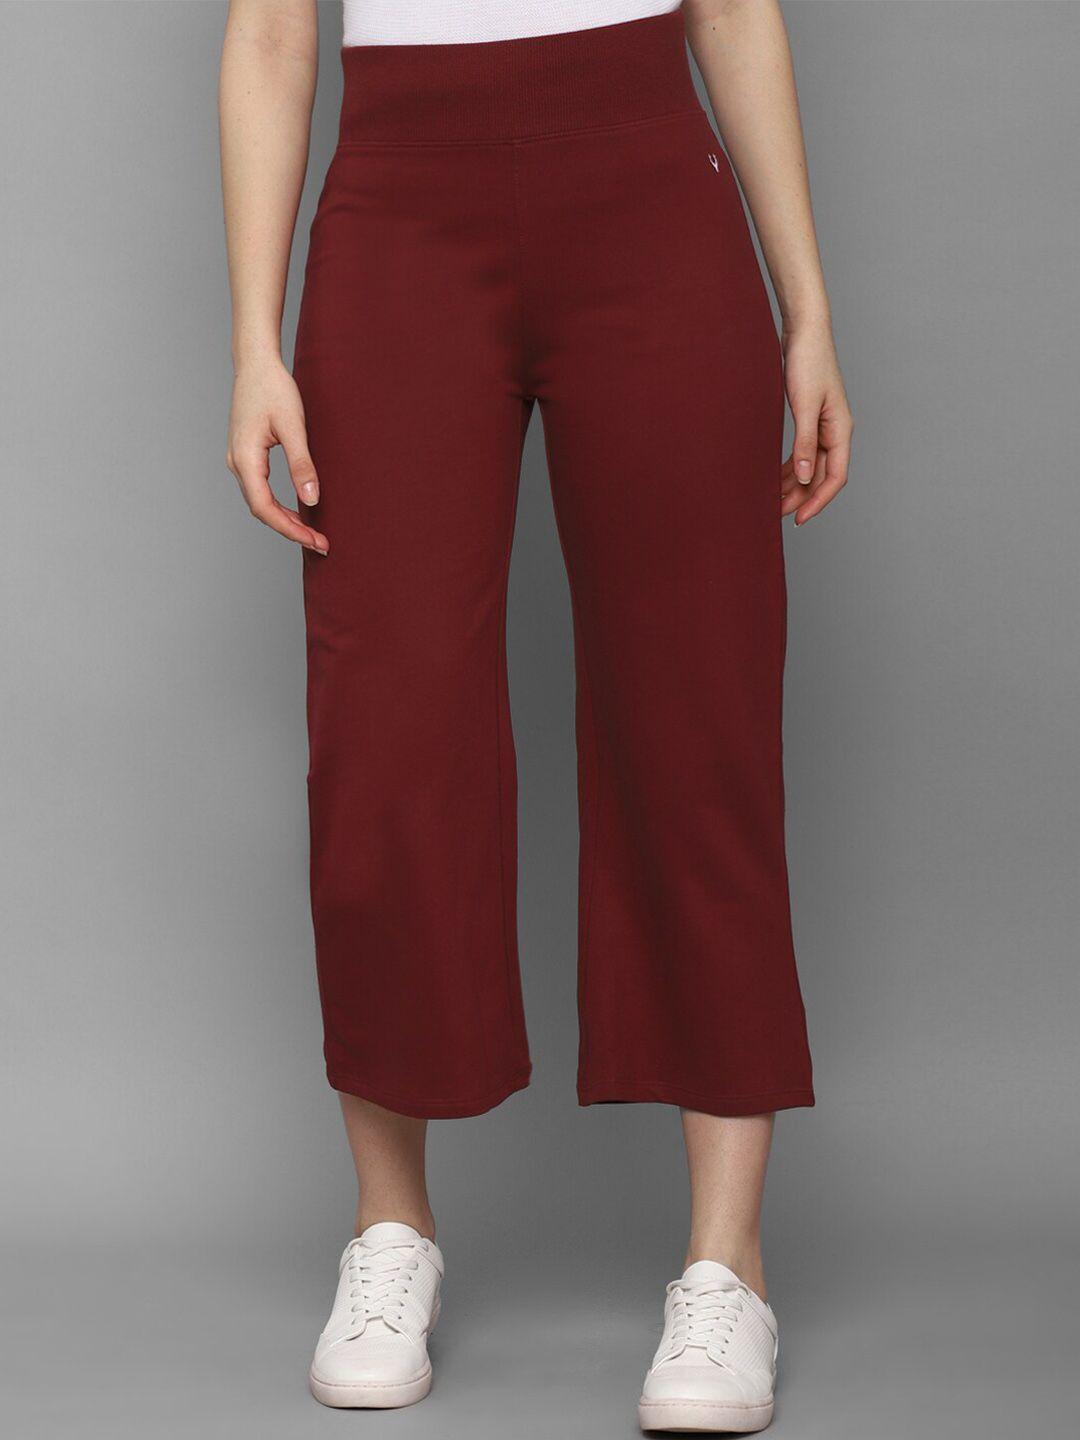 allen-solly-woman-women-maroon-solid-culottes-trousers